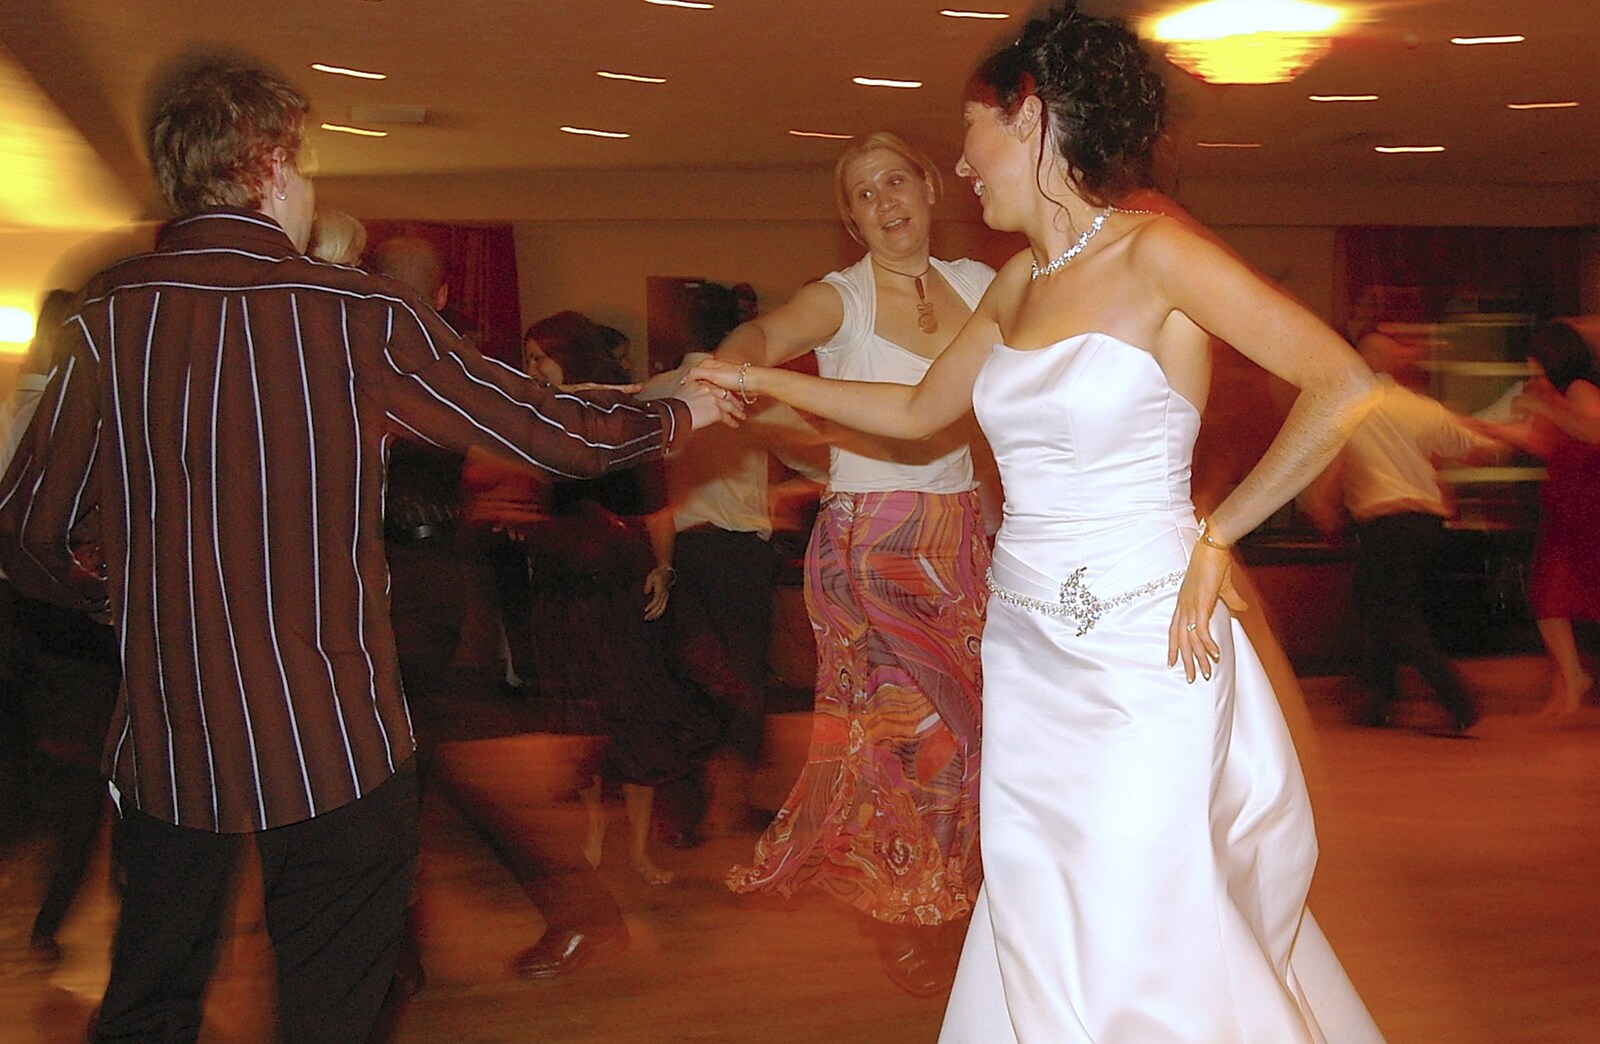 Caroline dances from Caroline and Chris's Wedding, Spanish Point, County Clare, Ireland - 26th October 2006